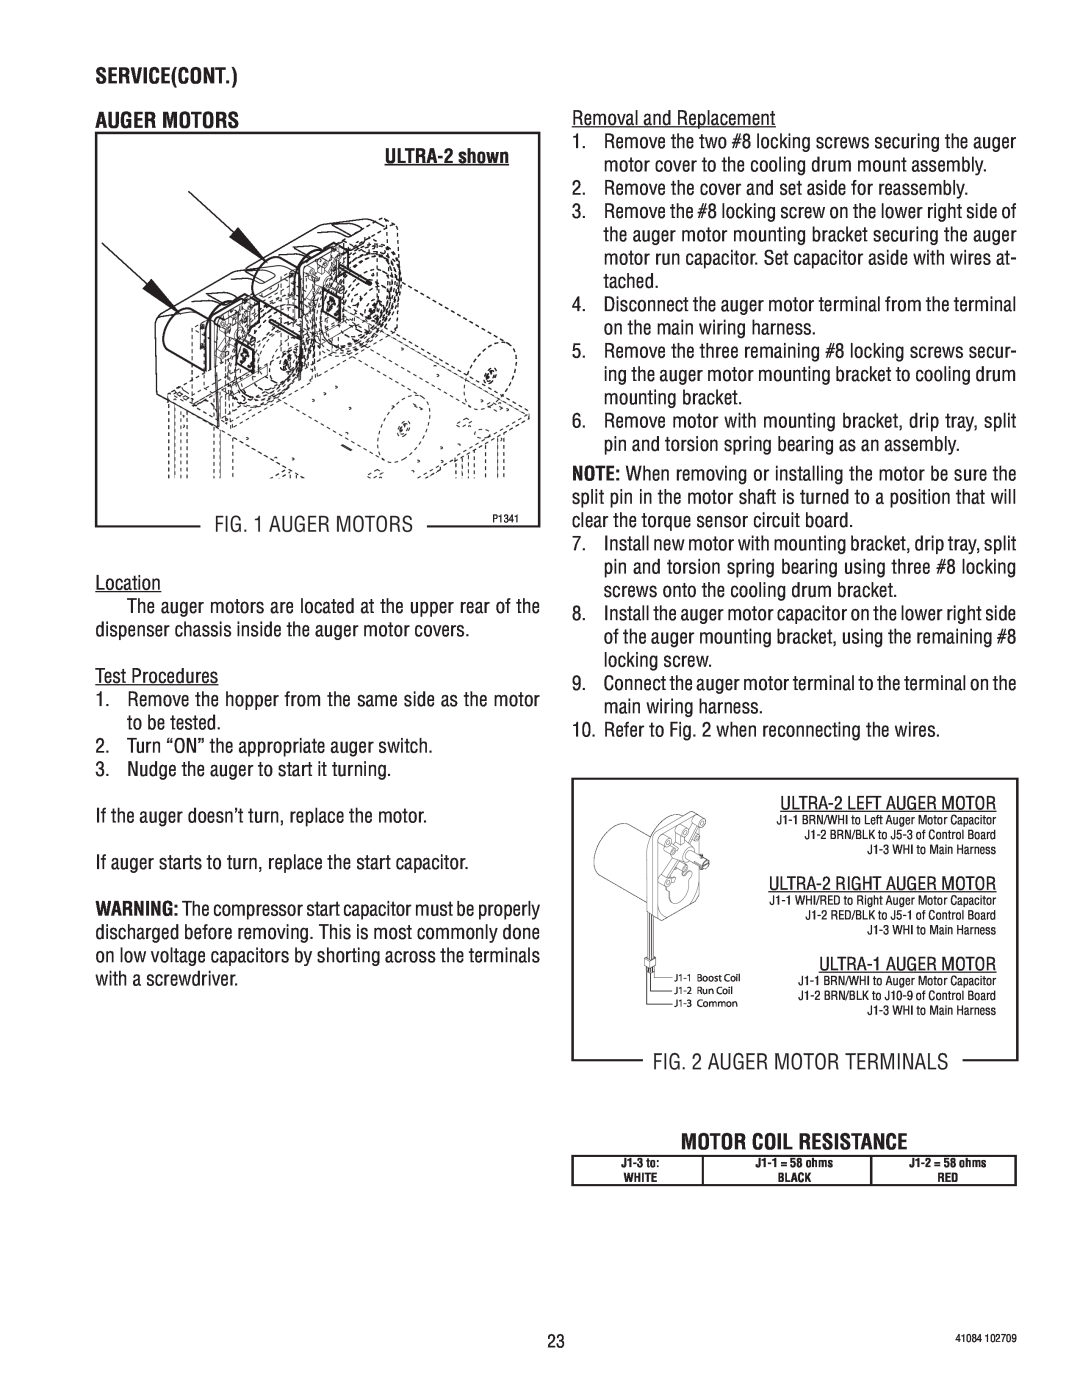 Bunn ULTRA-1 manual SERVICEcont AUGER MOTORS, Auger Motors, Motor Coil Resistance, Auger Motor Terminals 